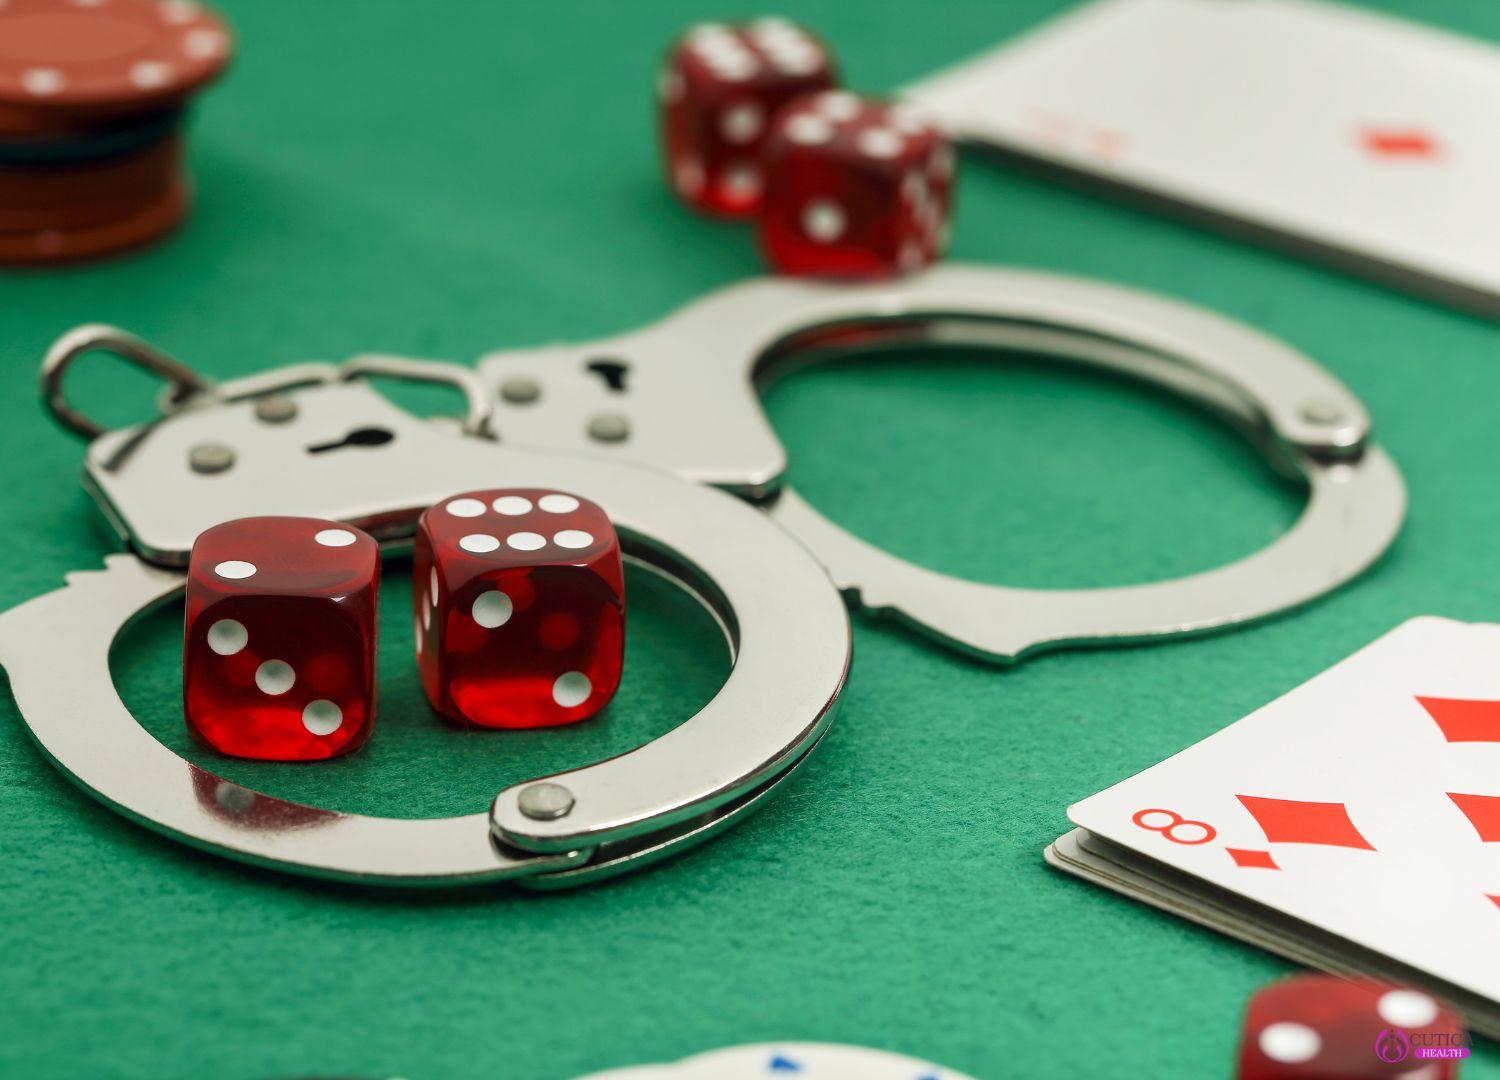 Understanding Gambling Addiction: A Destructive Cycle